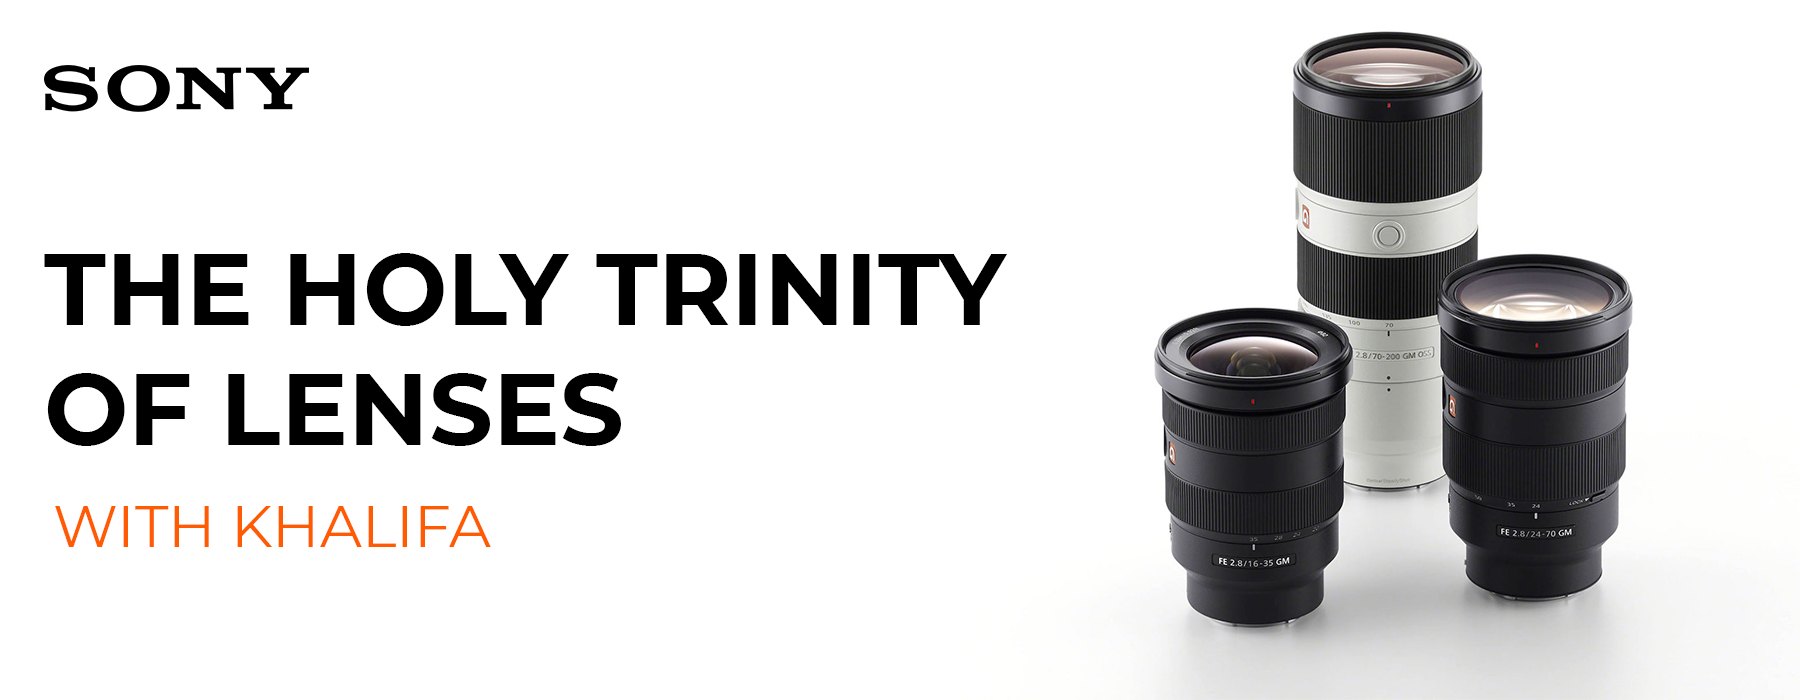 The Holy Trinity of Lenses